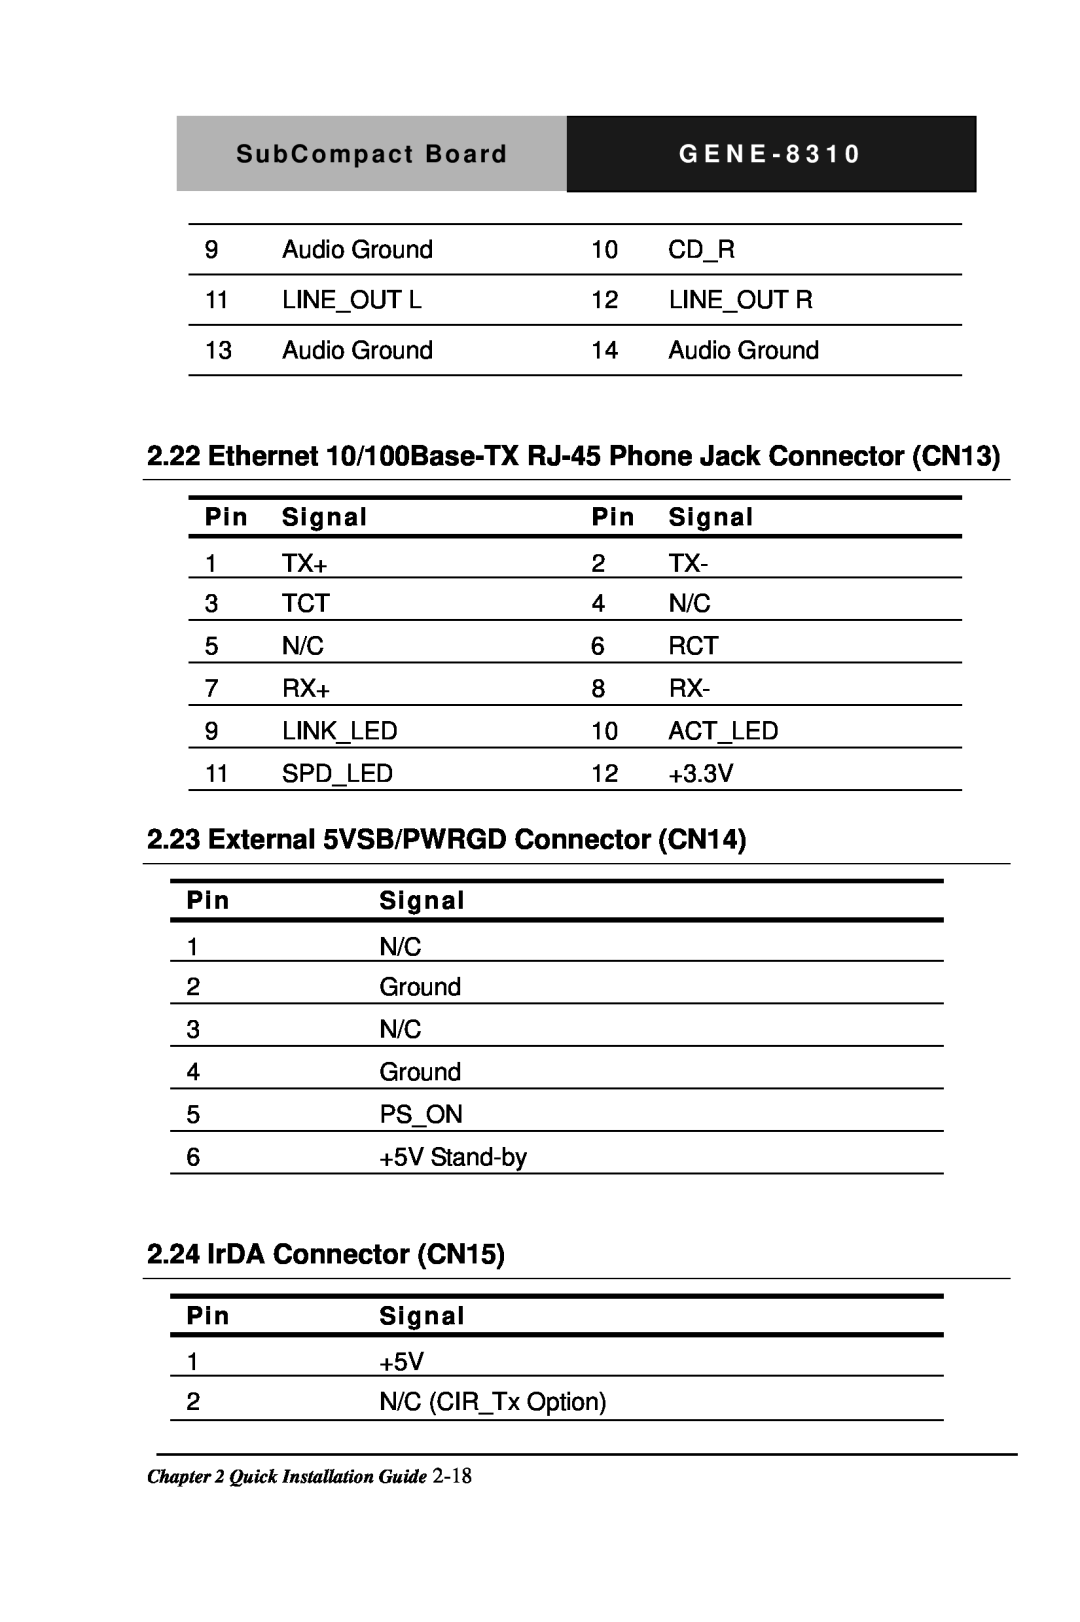 Intel GENE-8310 Ethernet 10/100Base-TX RJ-45 Phone Jack Connector CN13, External 5VSB/PWRGD Connector CN14, G E N E - 8 